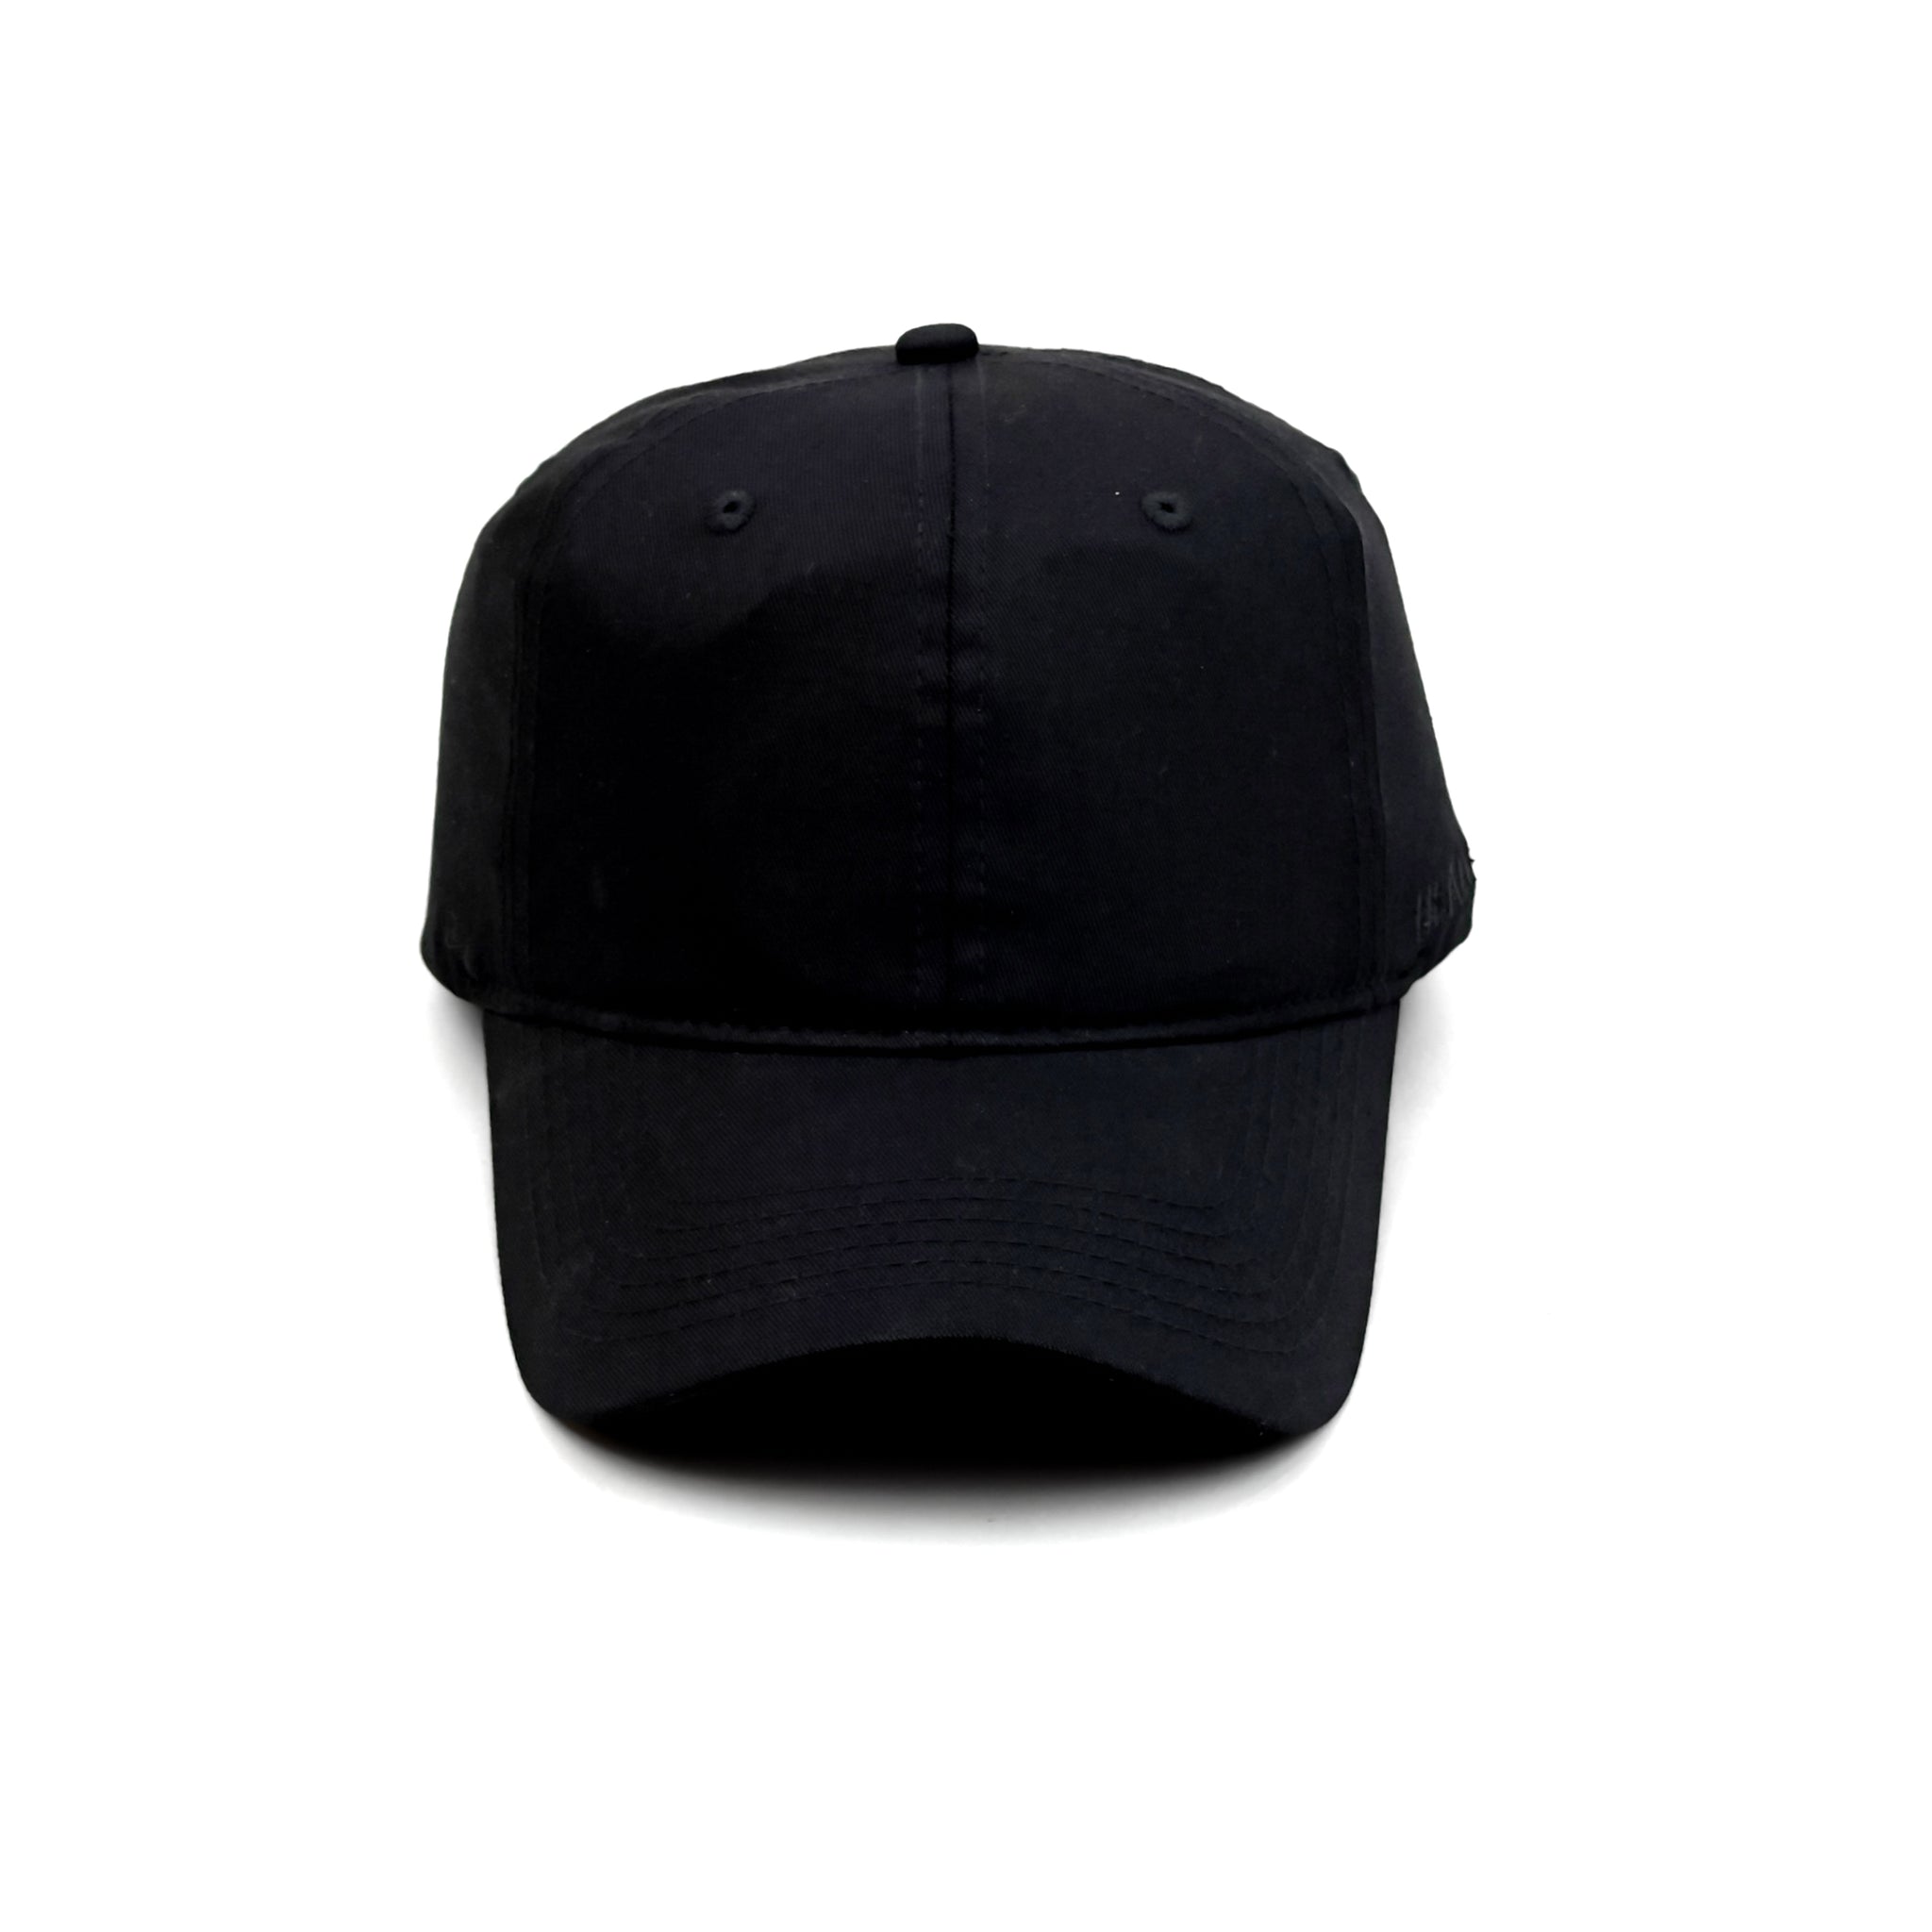 HEAD GEAR BASIC BLACK CAP – Head Gear